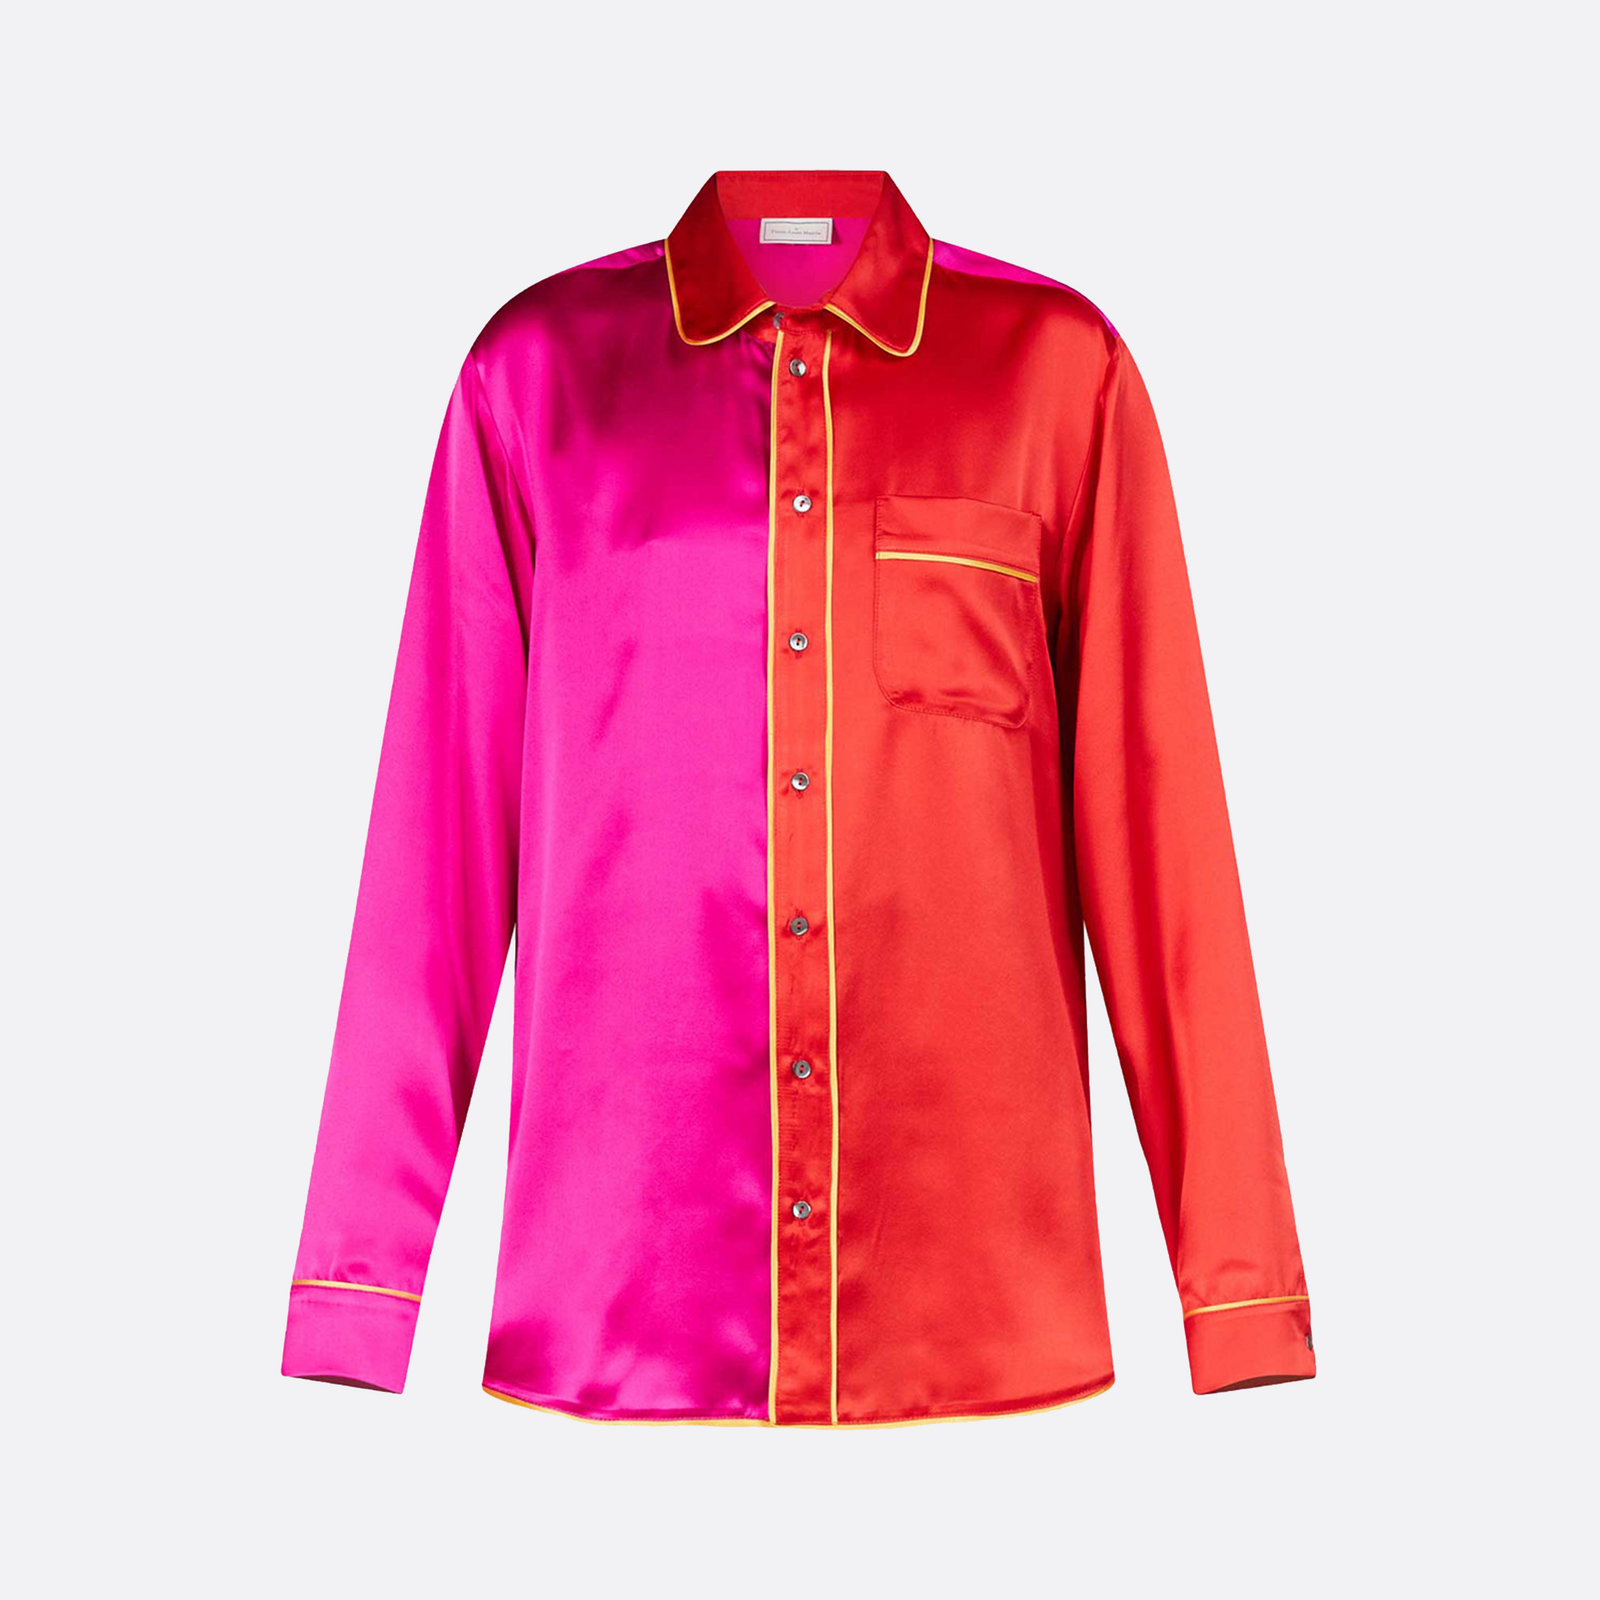 Contrast Silk Button Down Shirt, magenta & red